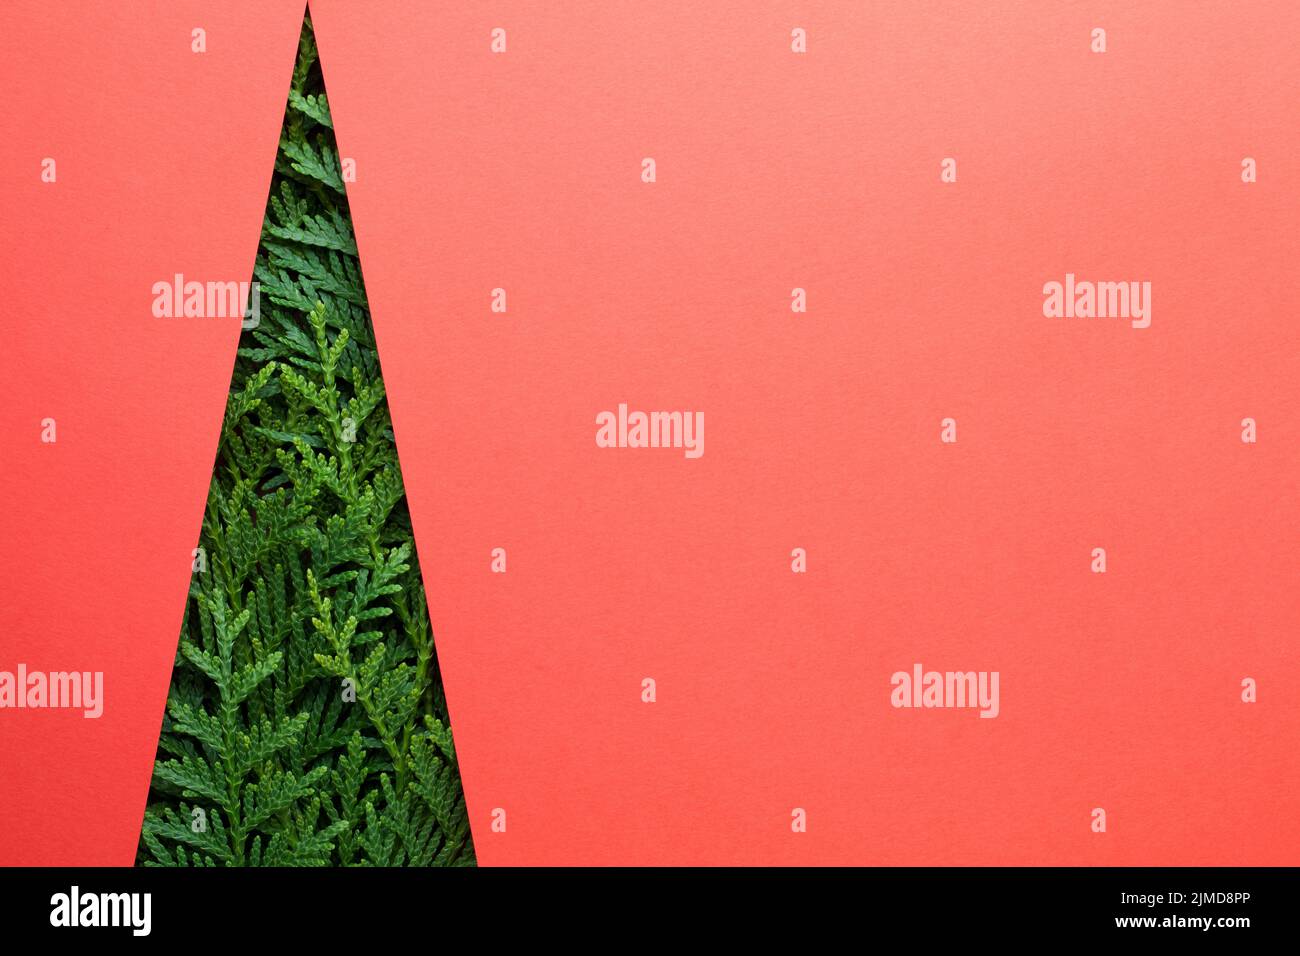 Minimal Creative Christmas Tree Made Of Thuja Stock Photo